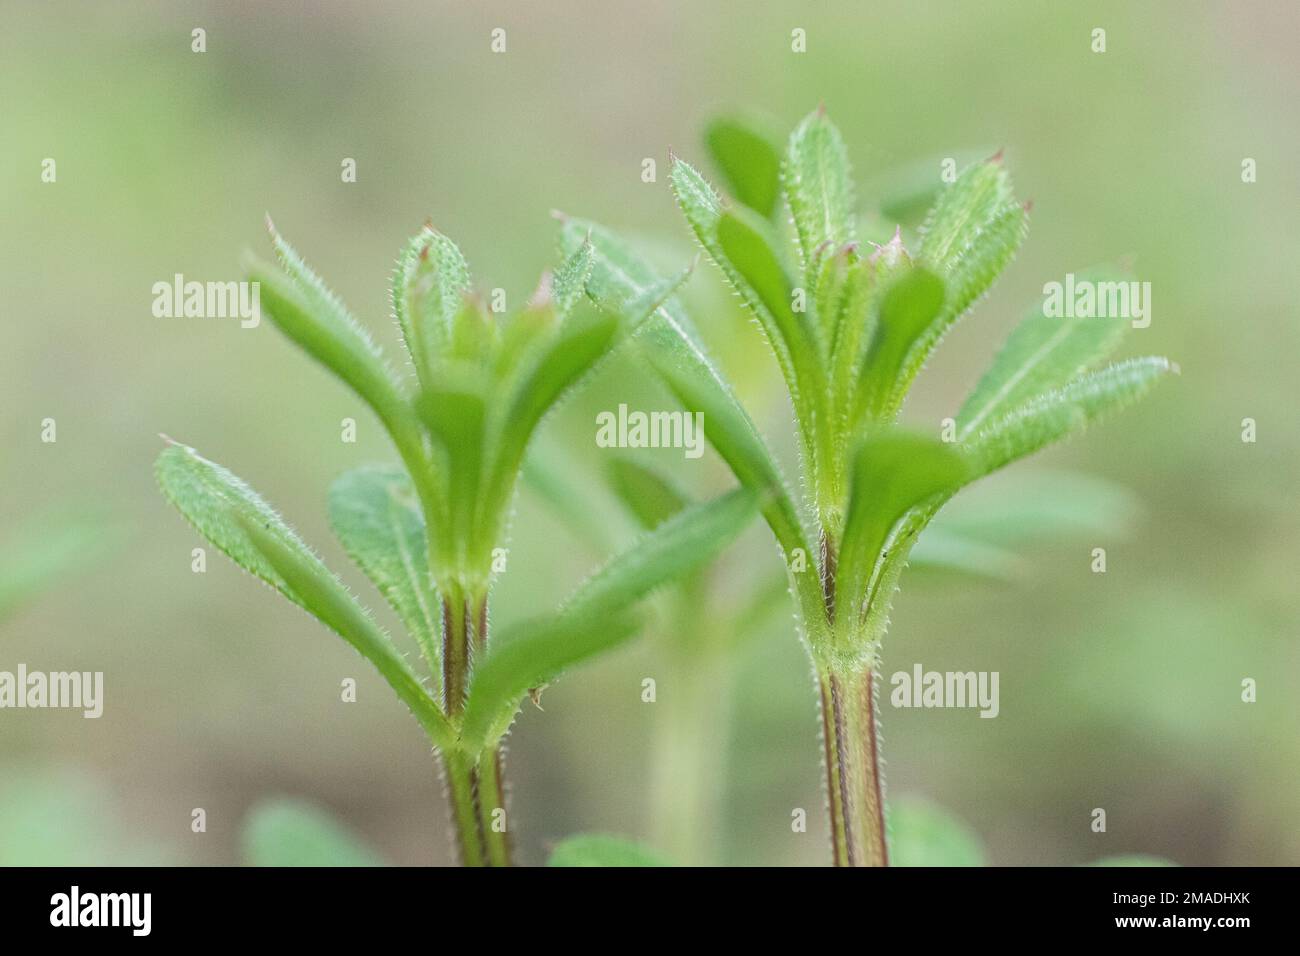 Galium aparine cleavers, catchweed, stickyweed, robin-run-the-hedge, sticky willy, sticky willow, stickyjack, stickeljack, and grip grass use in Stock Photo